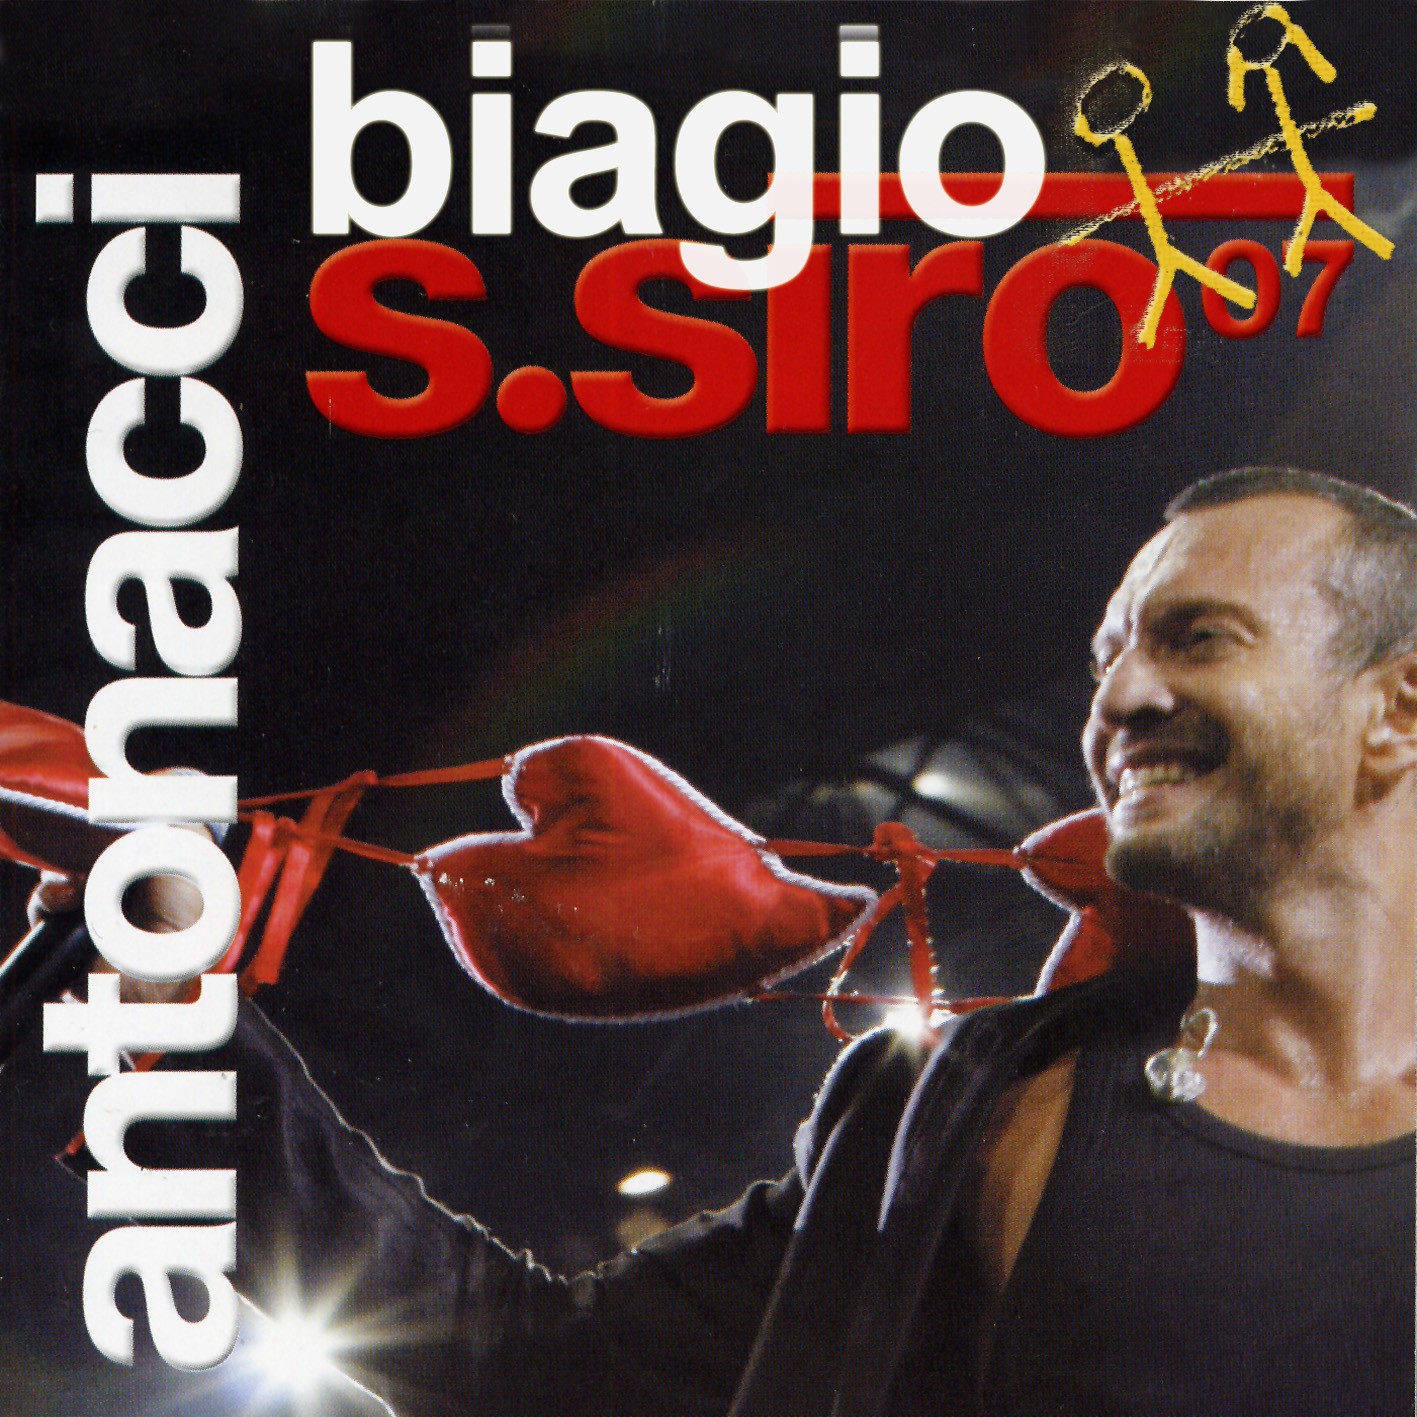 Copertina cd Biagio Antonacci - San Siro 2007 - front, cover cd Biagio ...